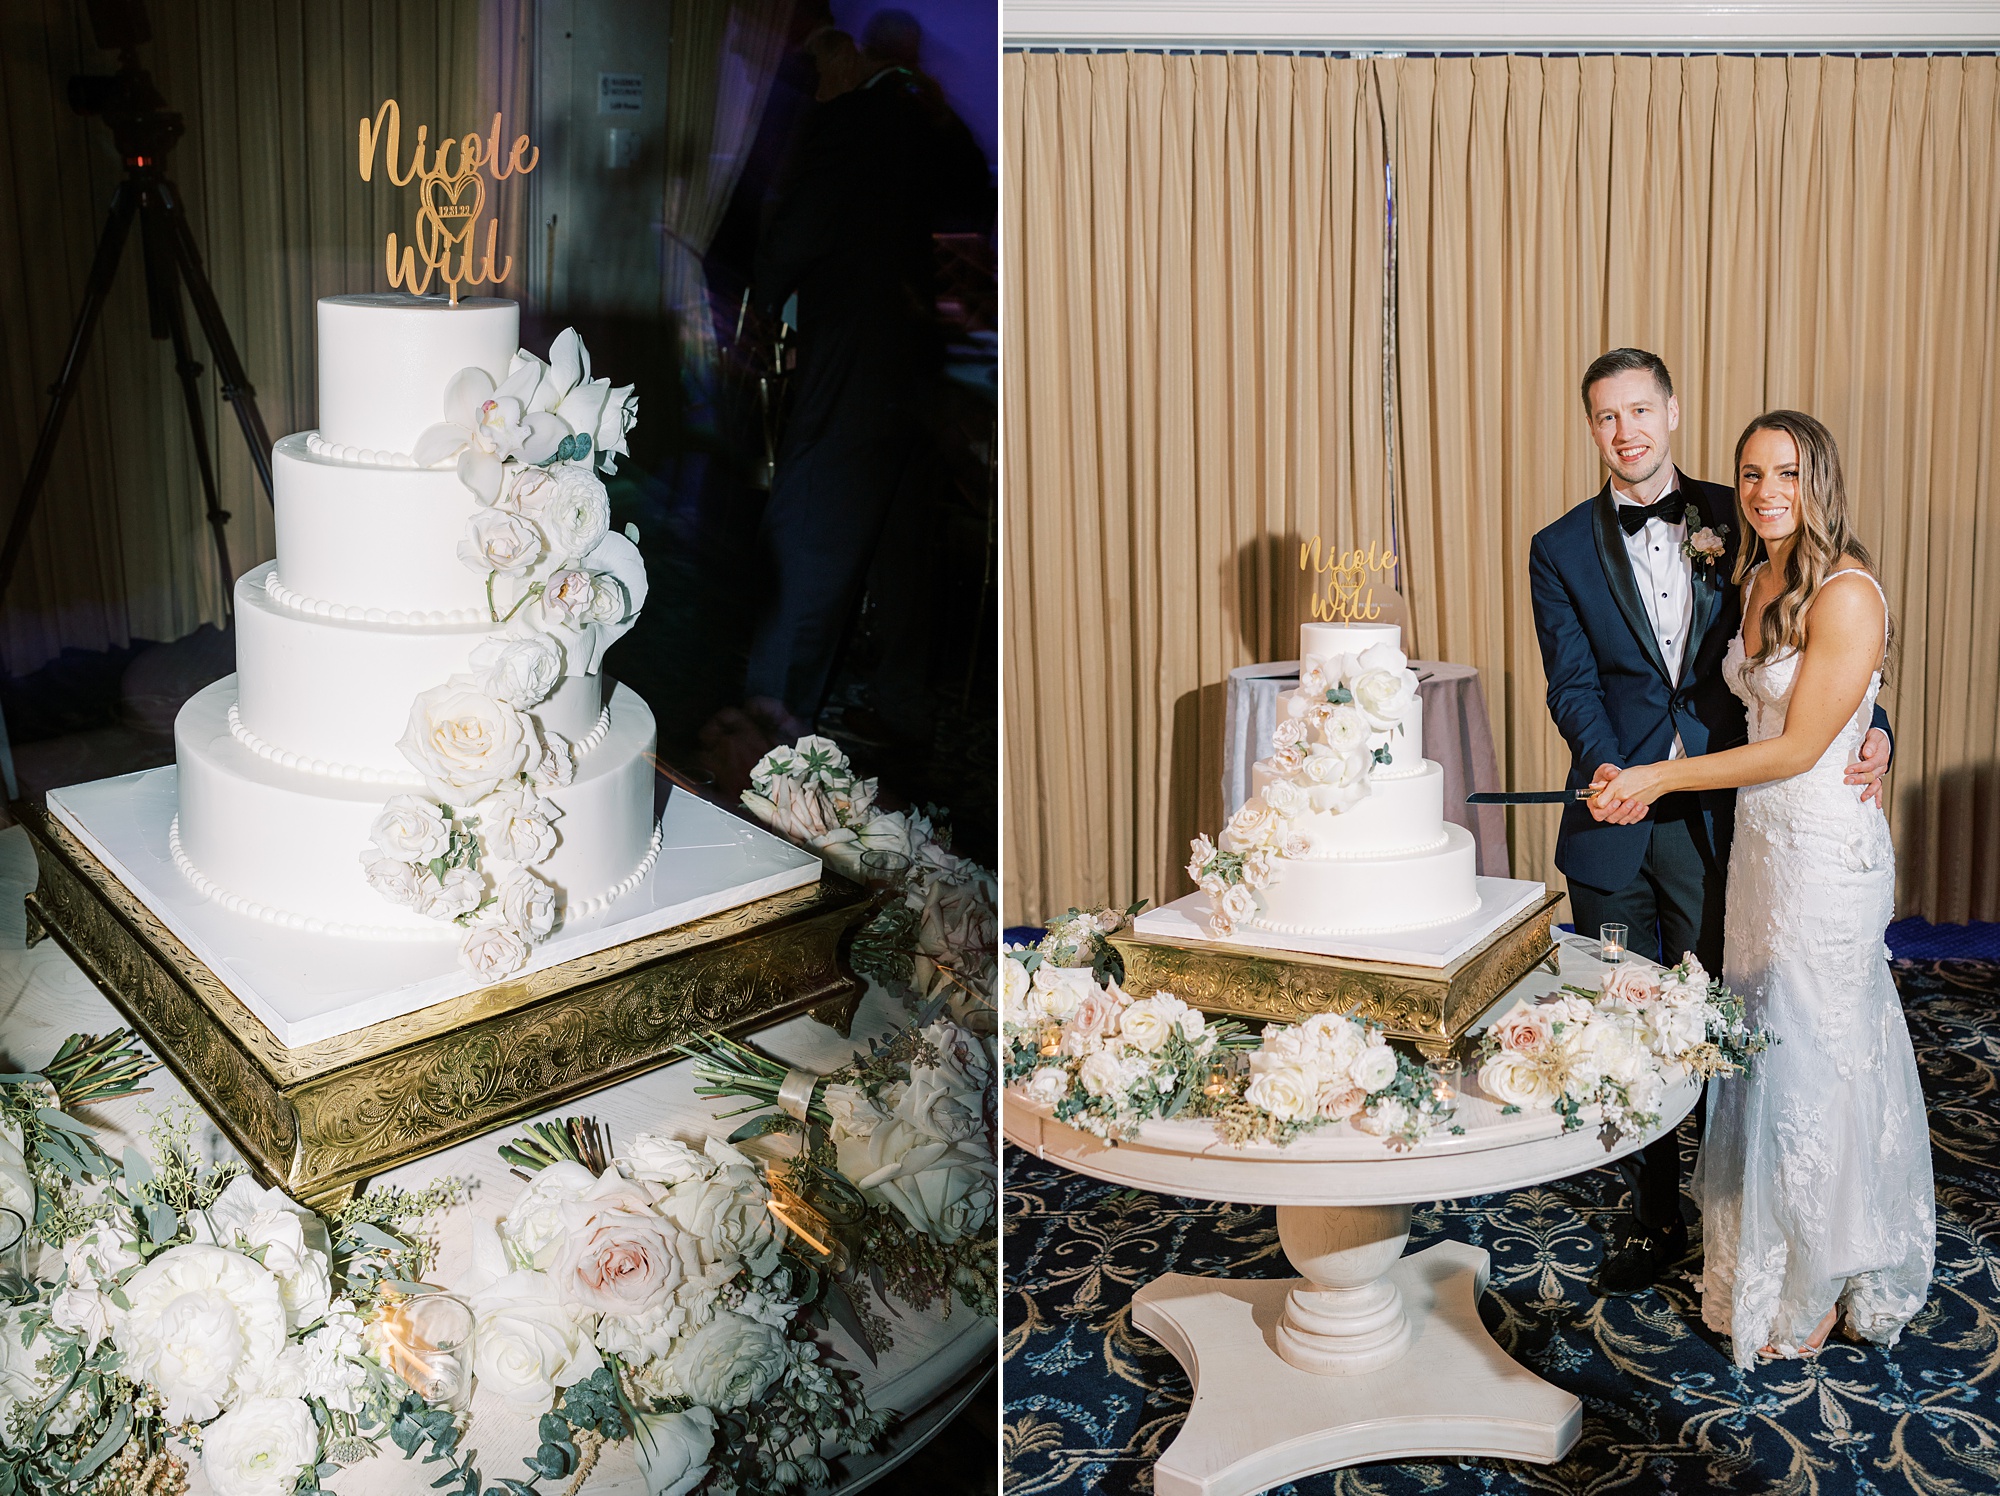 newlyweds cut wedding cake during New Jersey wedding reception 